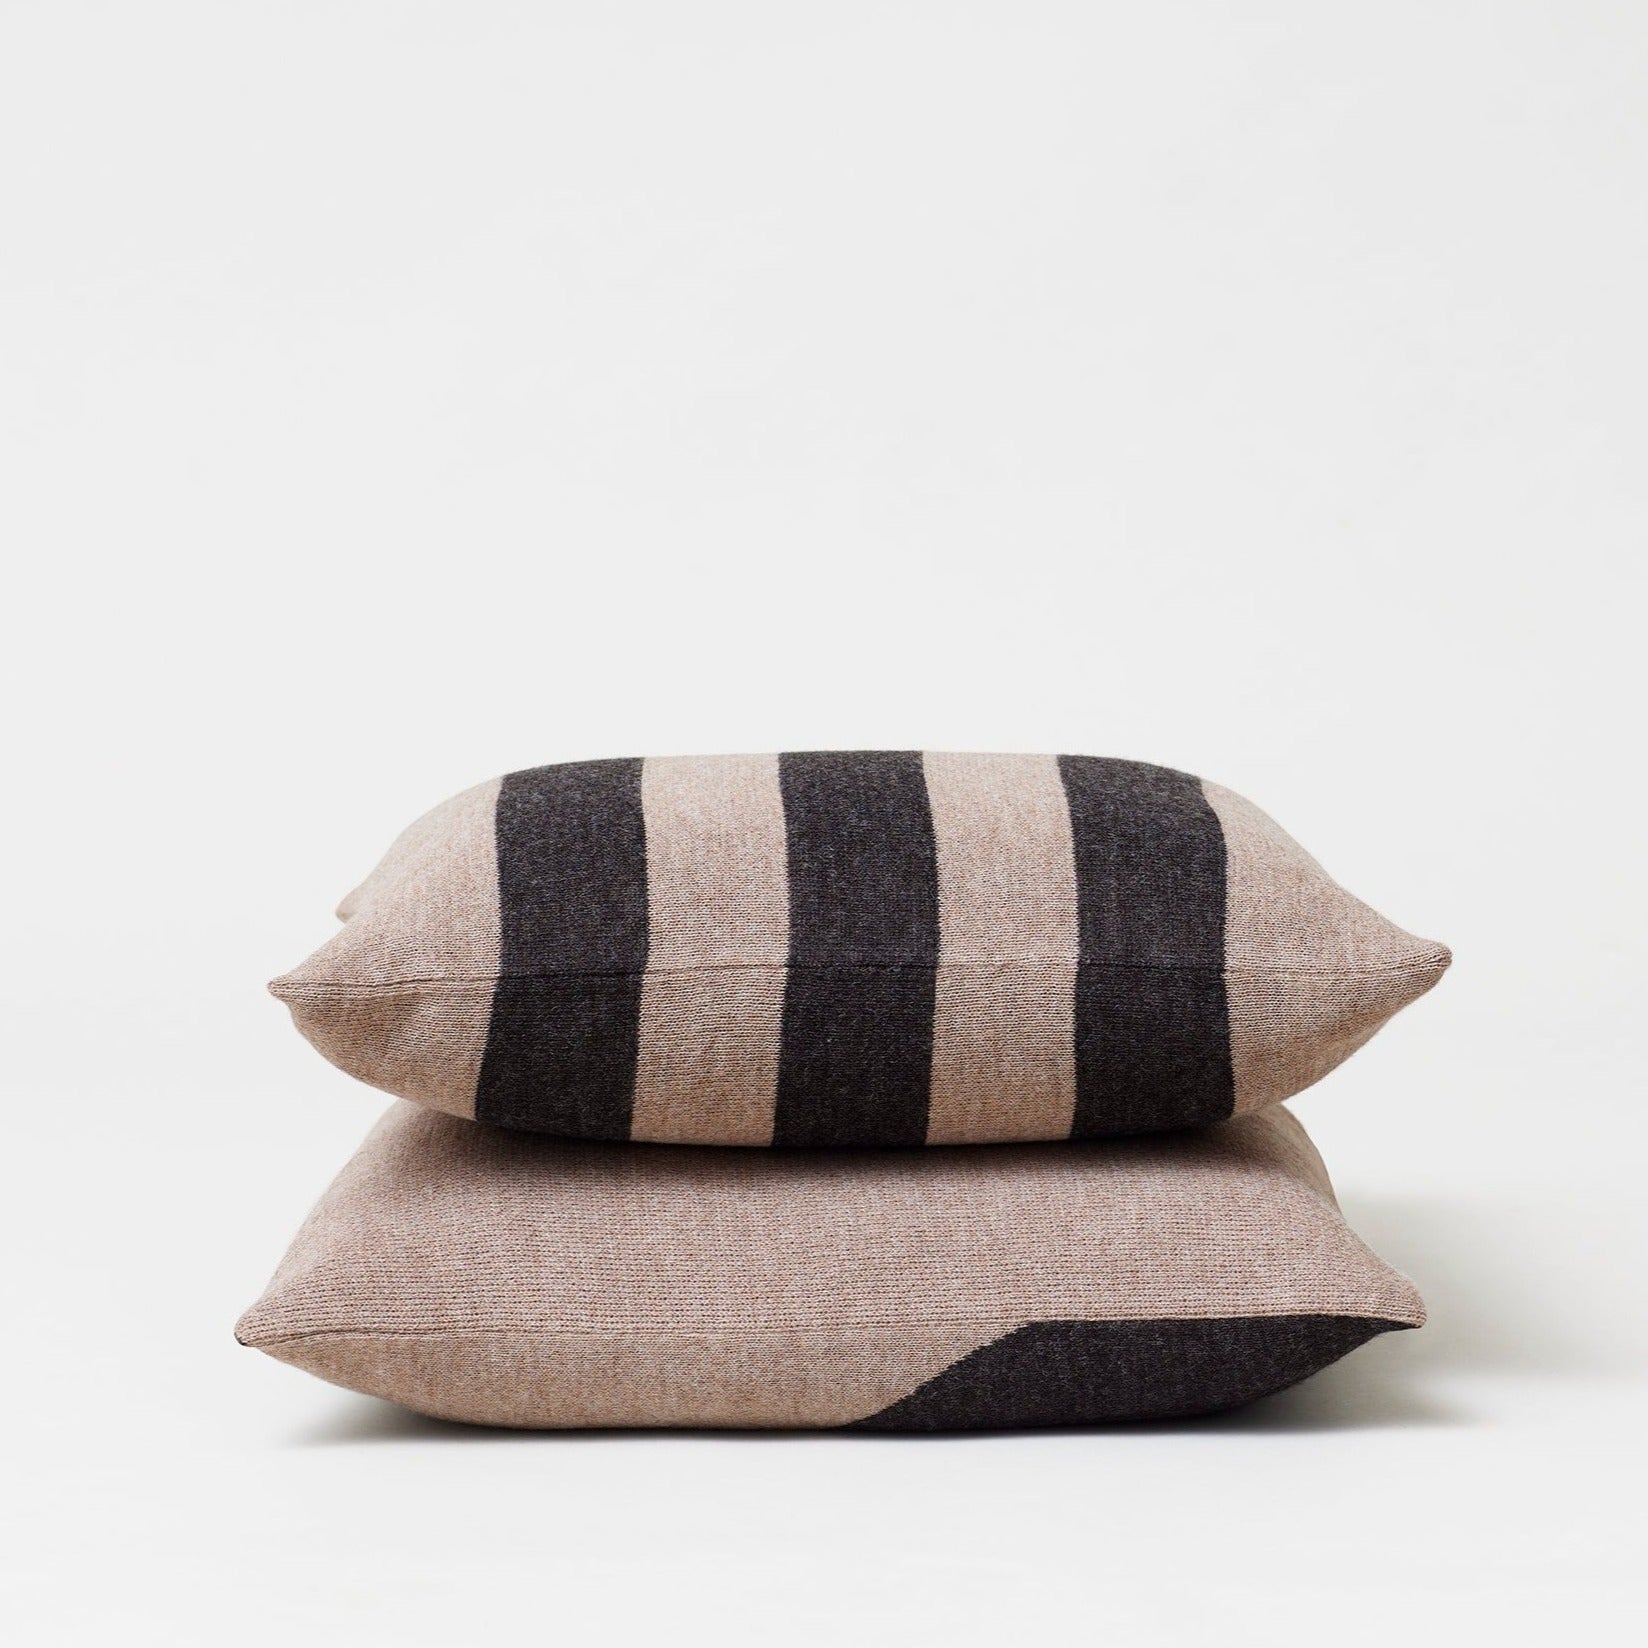 AYMARA Cushion Covers two pillows-striped pattern lighr brown colour